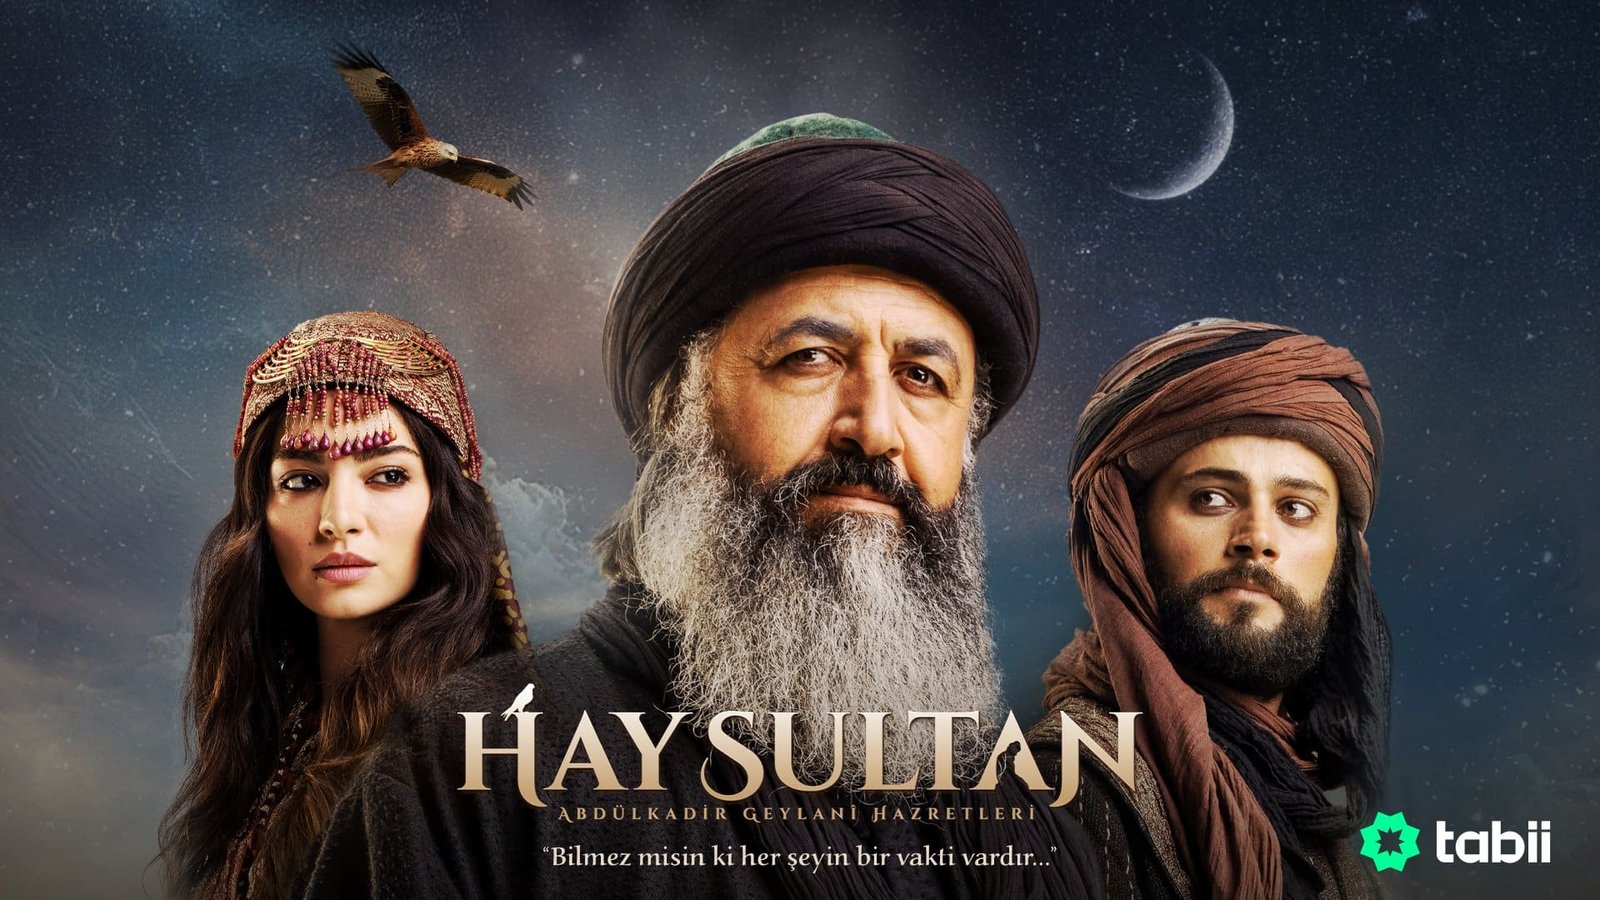 Hay Sultan Abdulkadir Geylani Episode 3 English Subtitles